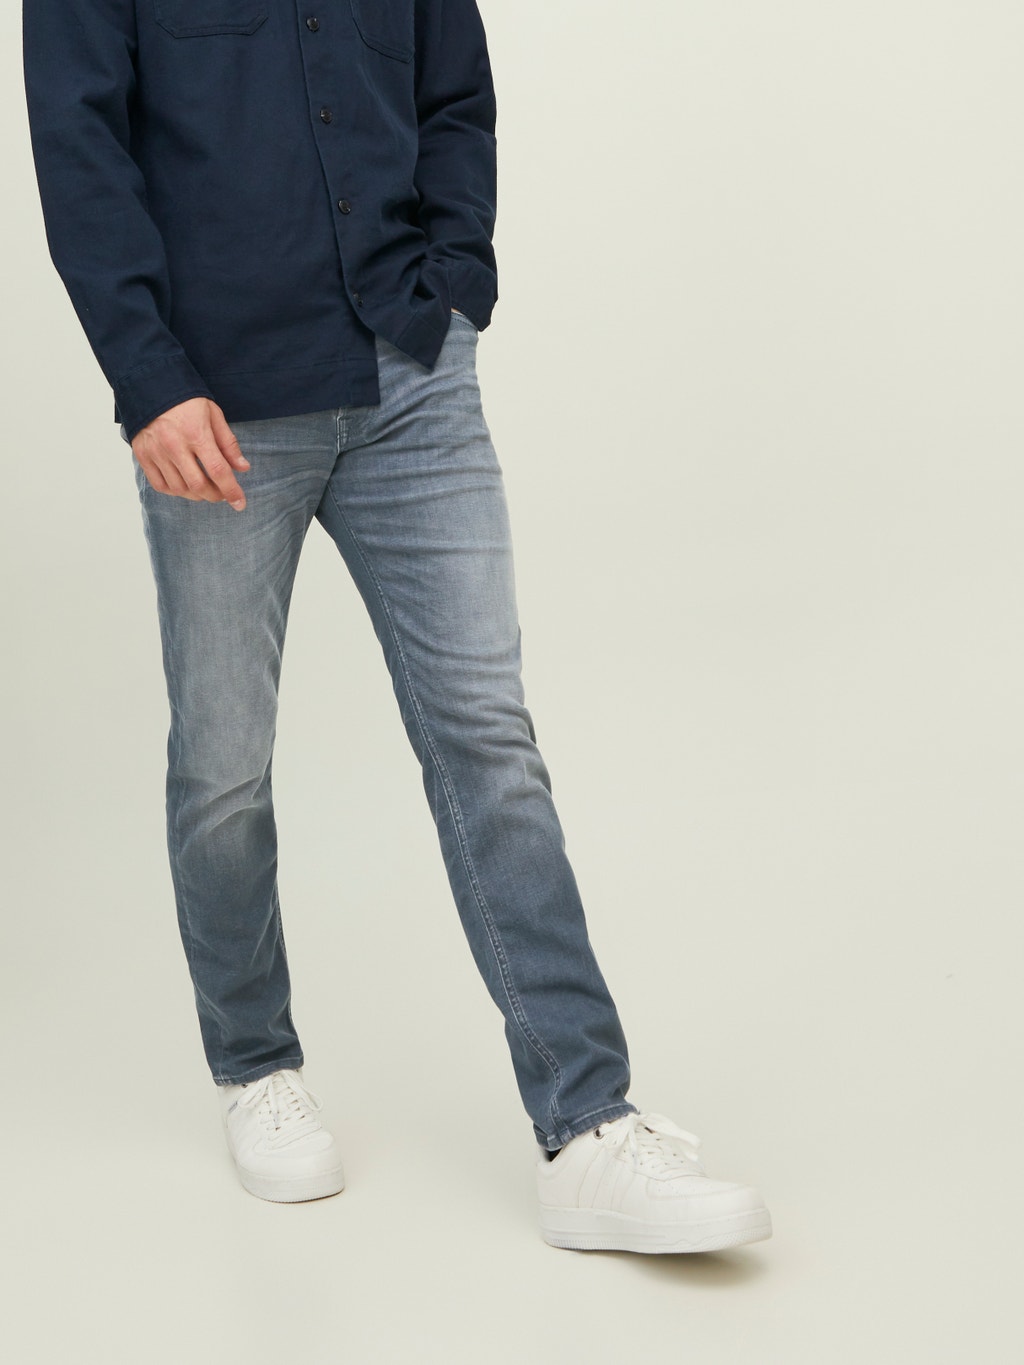 Tim JOS 319 Slim/straight fit jeans | Medium Grey | Jack Jones®